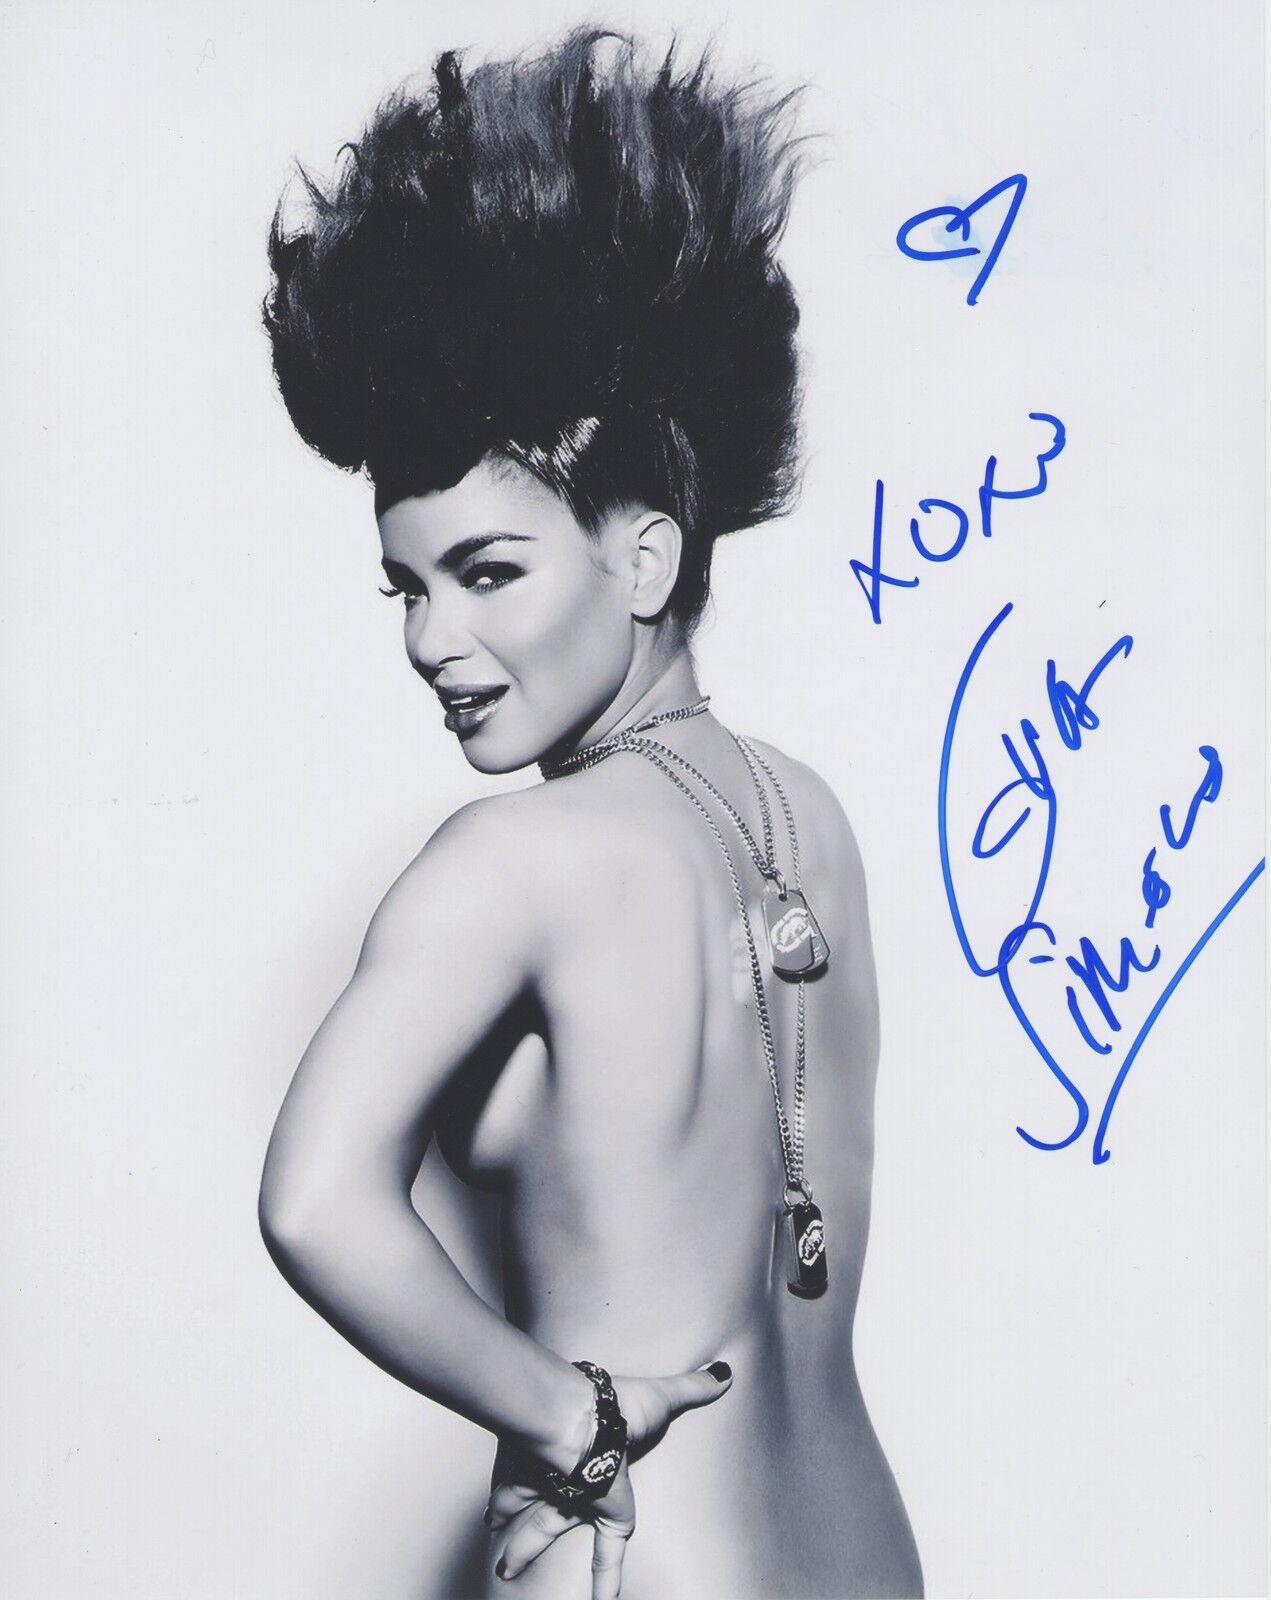 Eva Simons *LIVE MY LIFE* HOT Naked Signed 8x10 Party Rock Photo Poster painting PROOF COA GFA